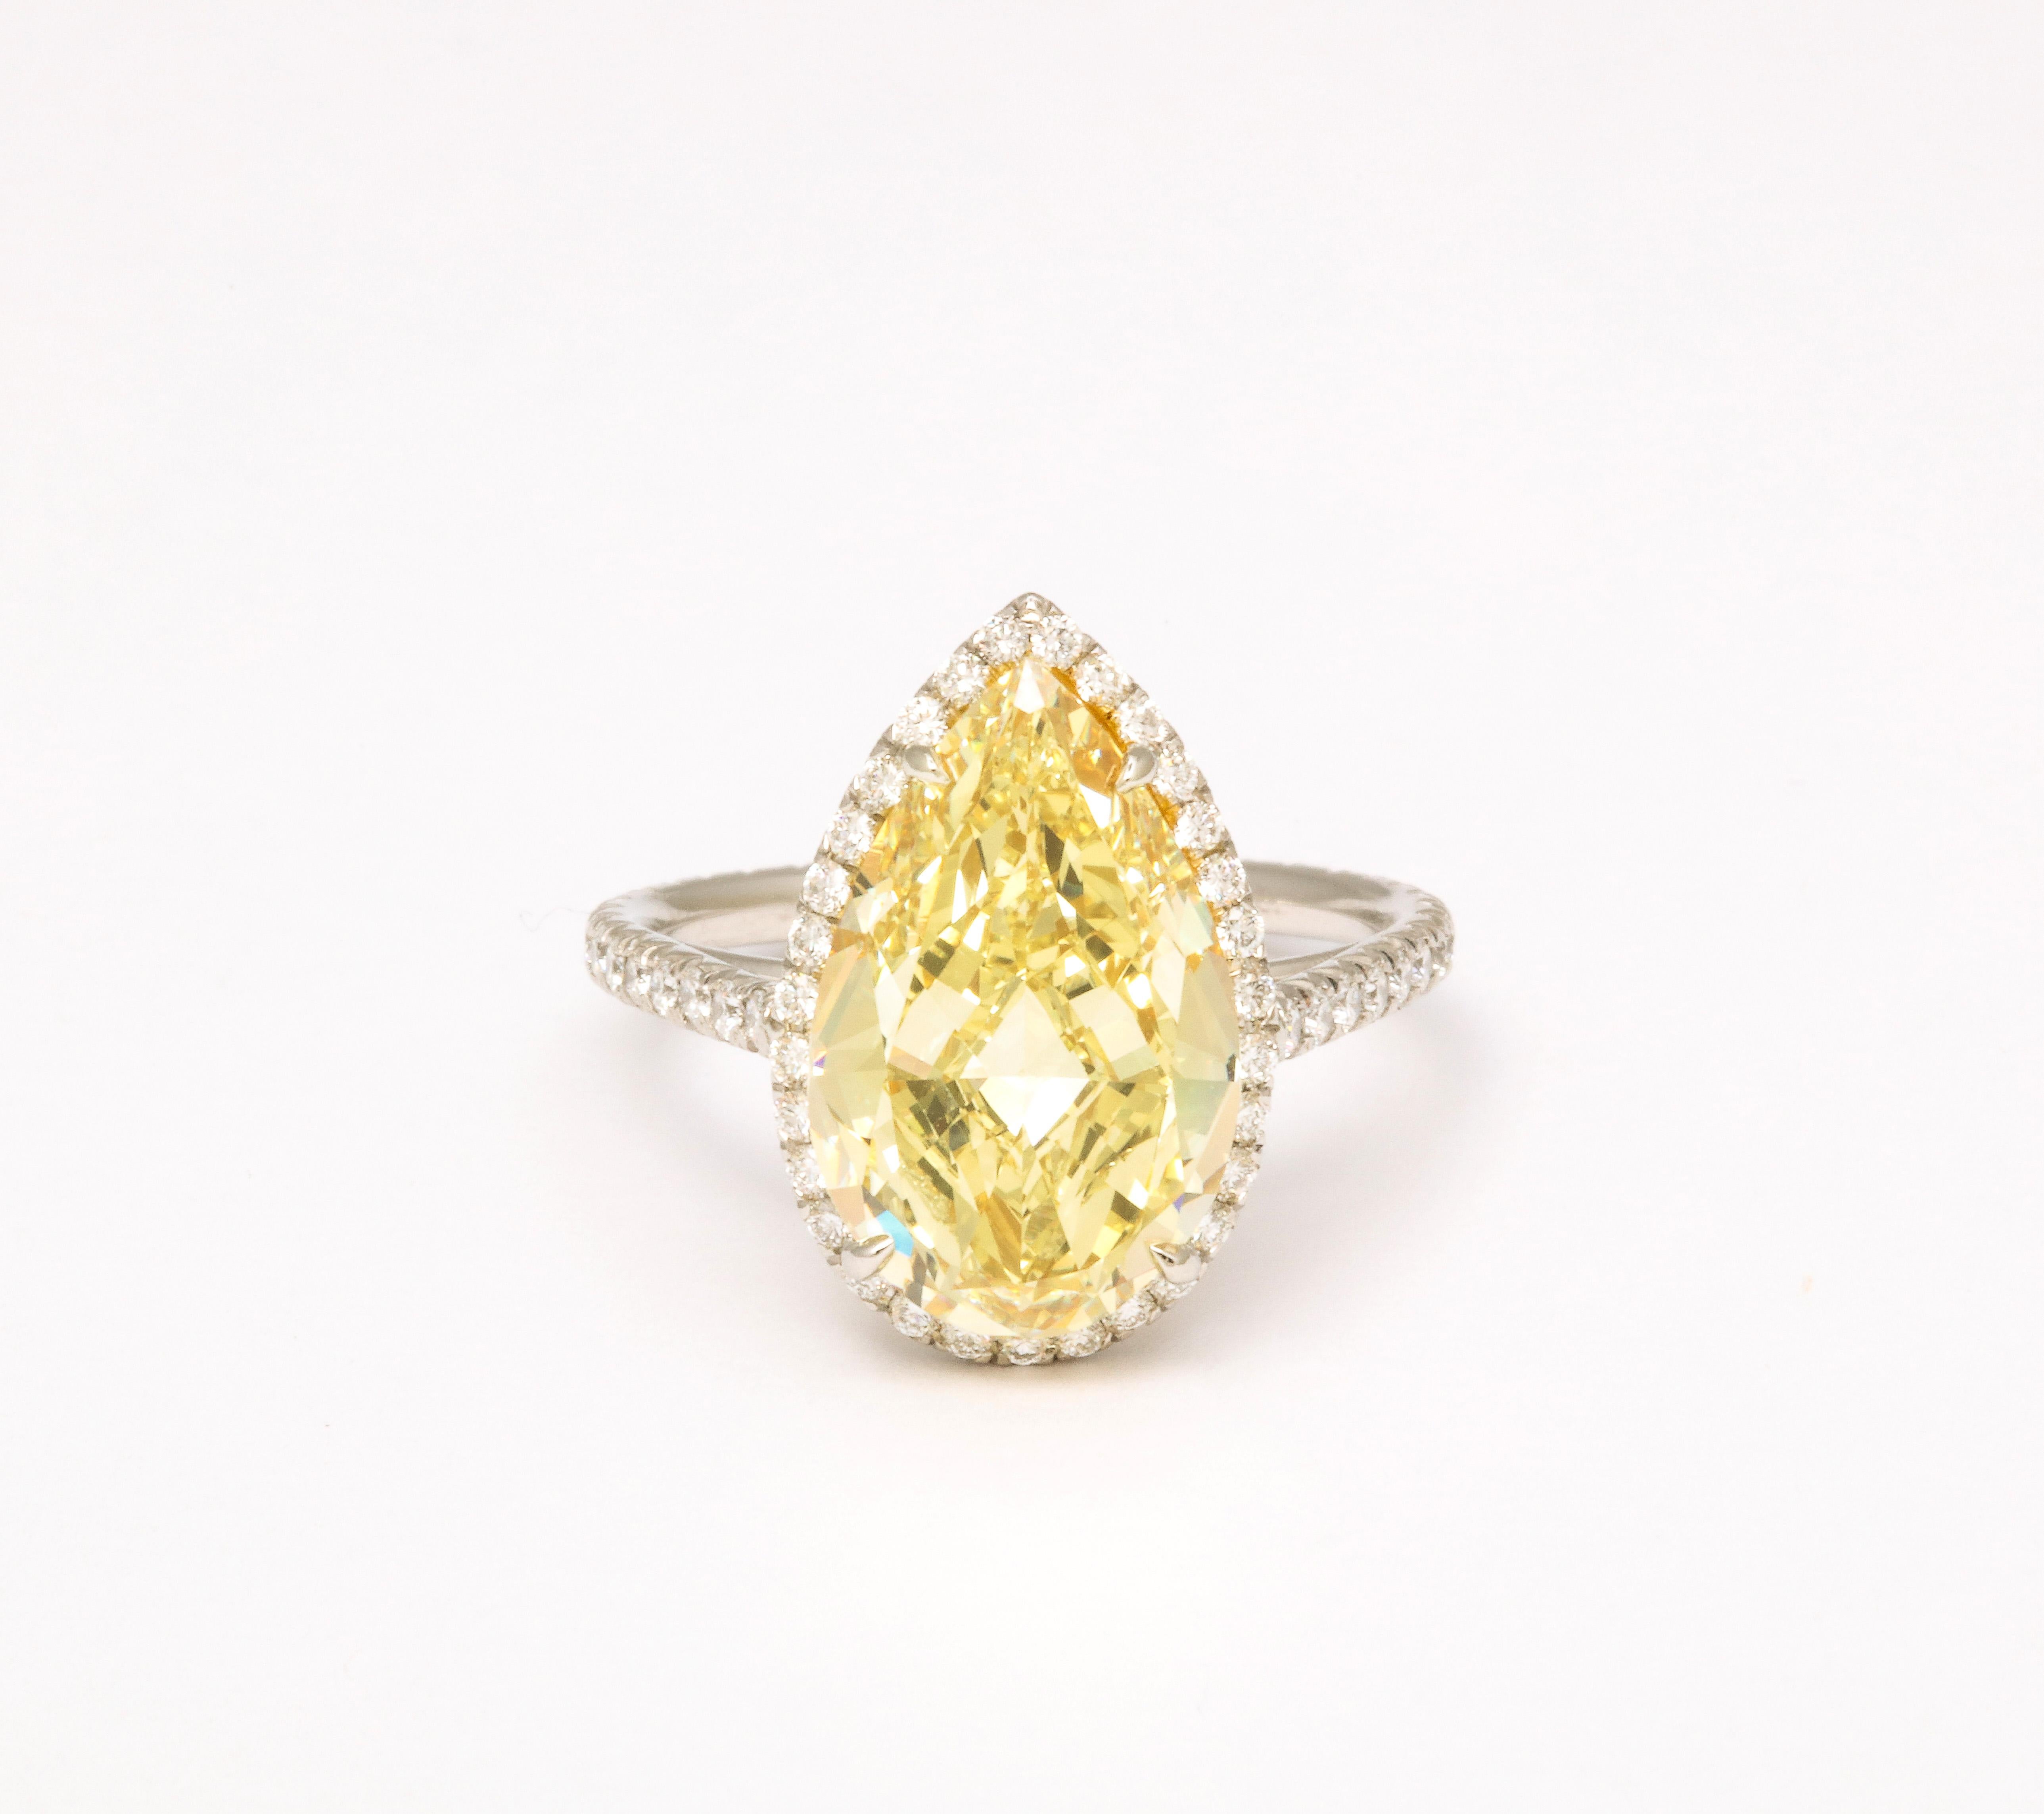 5 carat Fancy Yellow Pear Shape Diamond Ring  For Sale 1